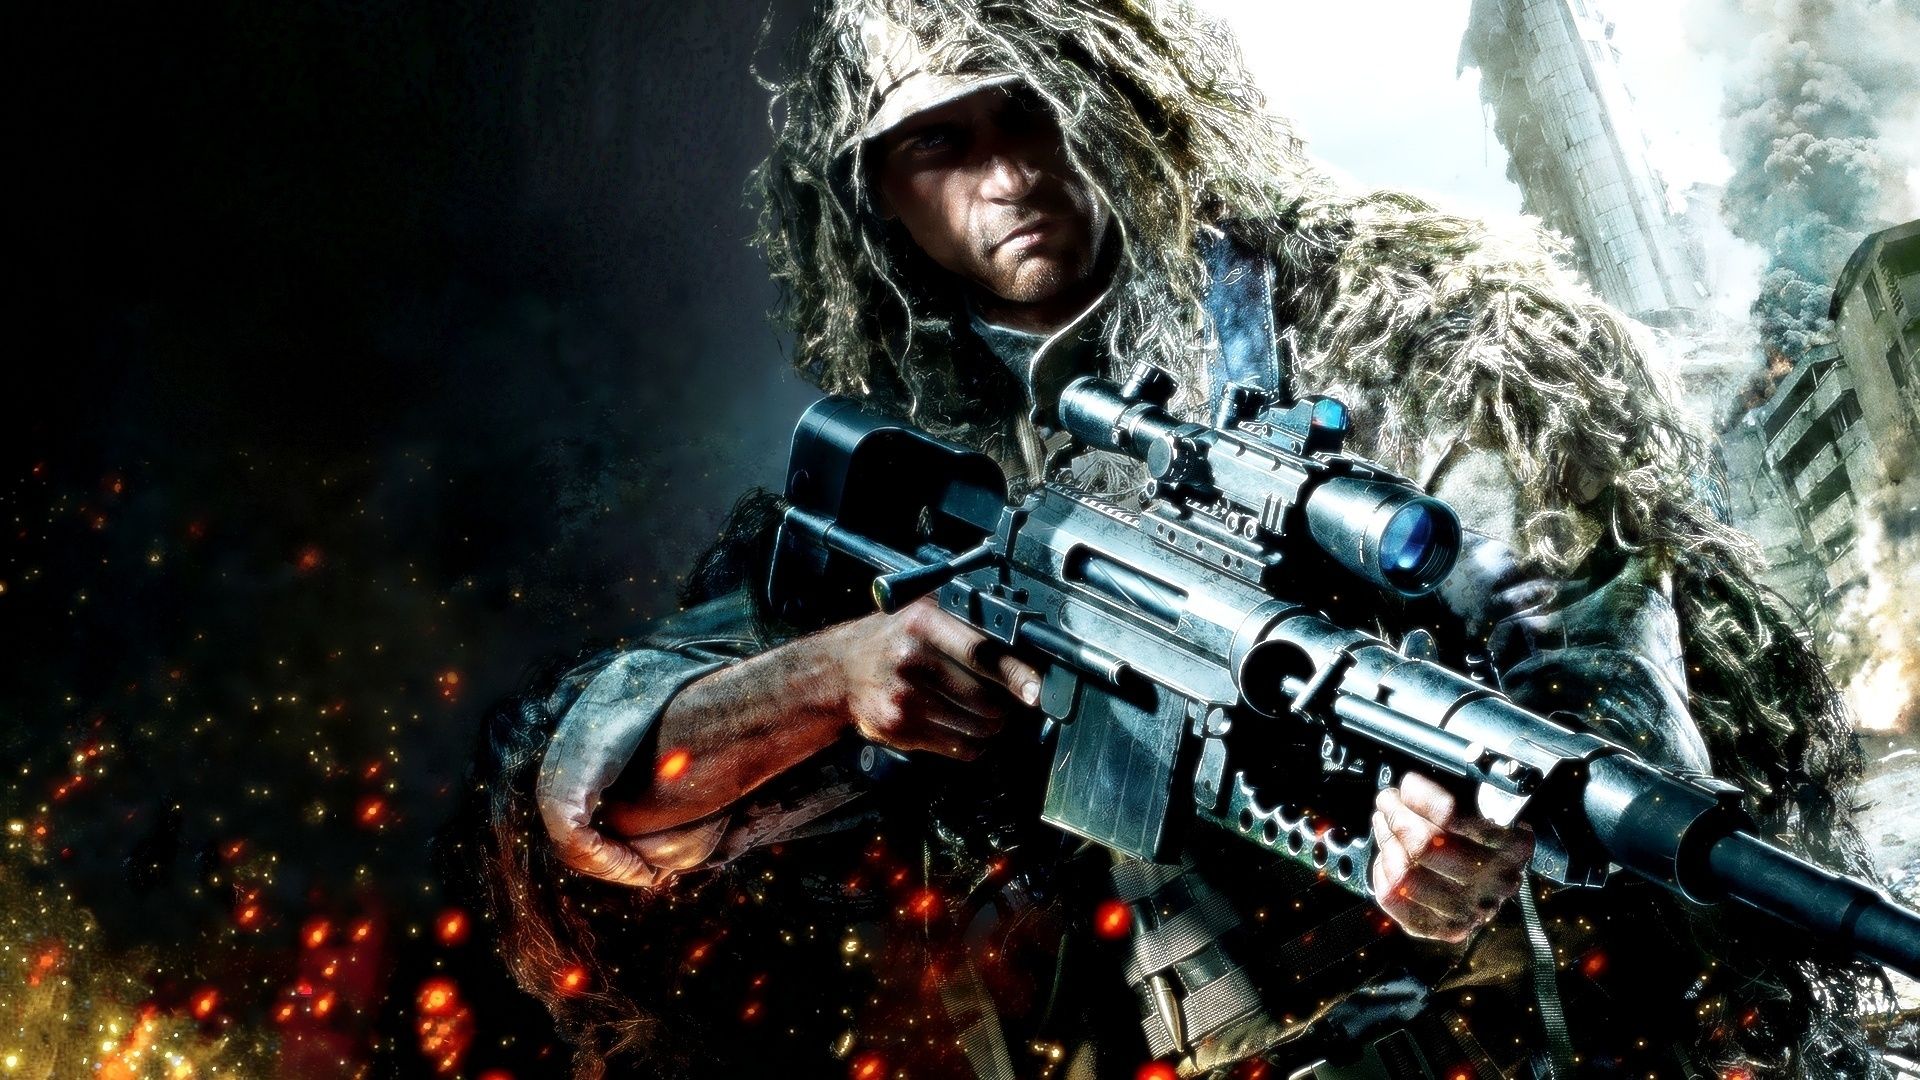 General 1920x1080 men soldier sniper rifle CheyTac M200 weapon gun Battlefield 4 video games PC gaming video game men video game art